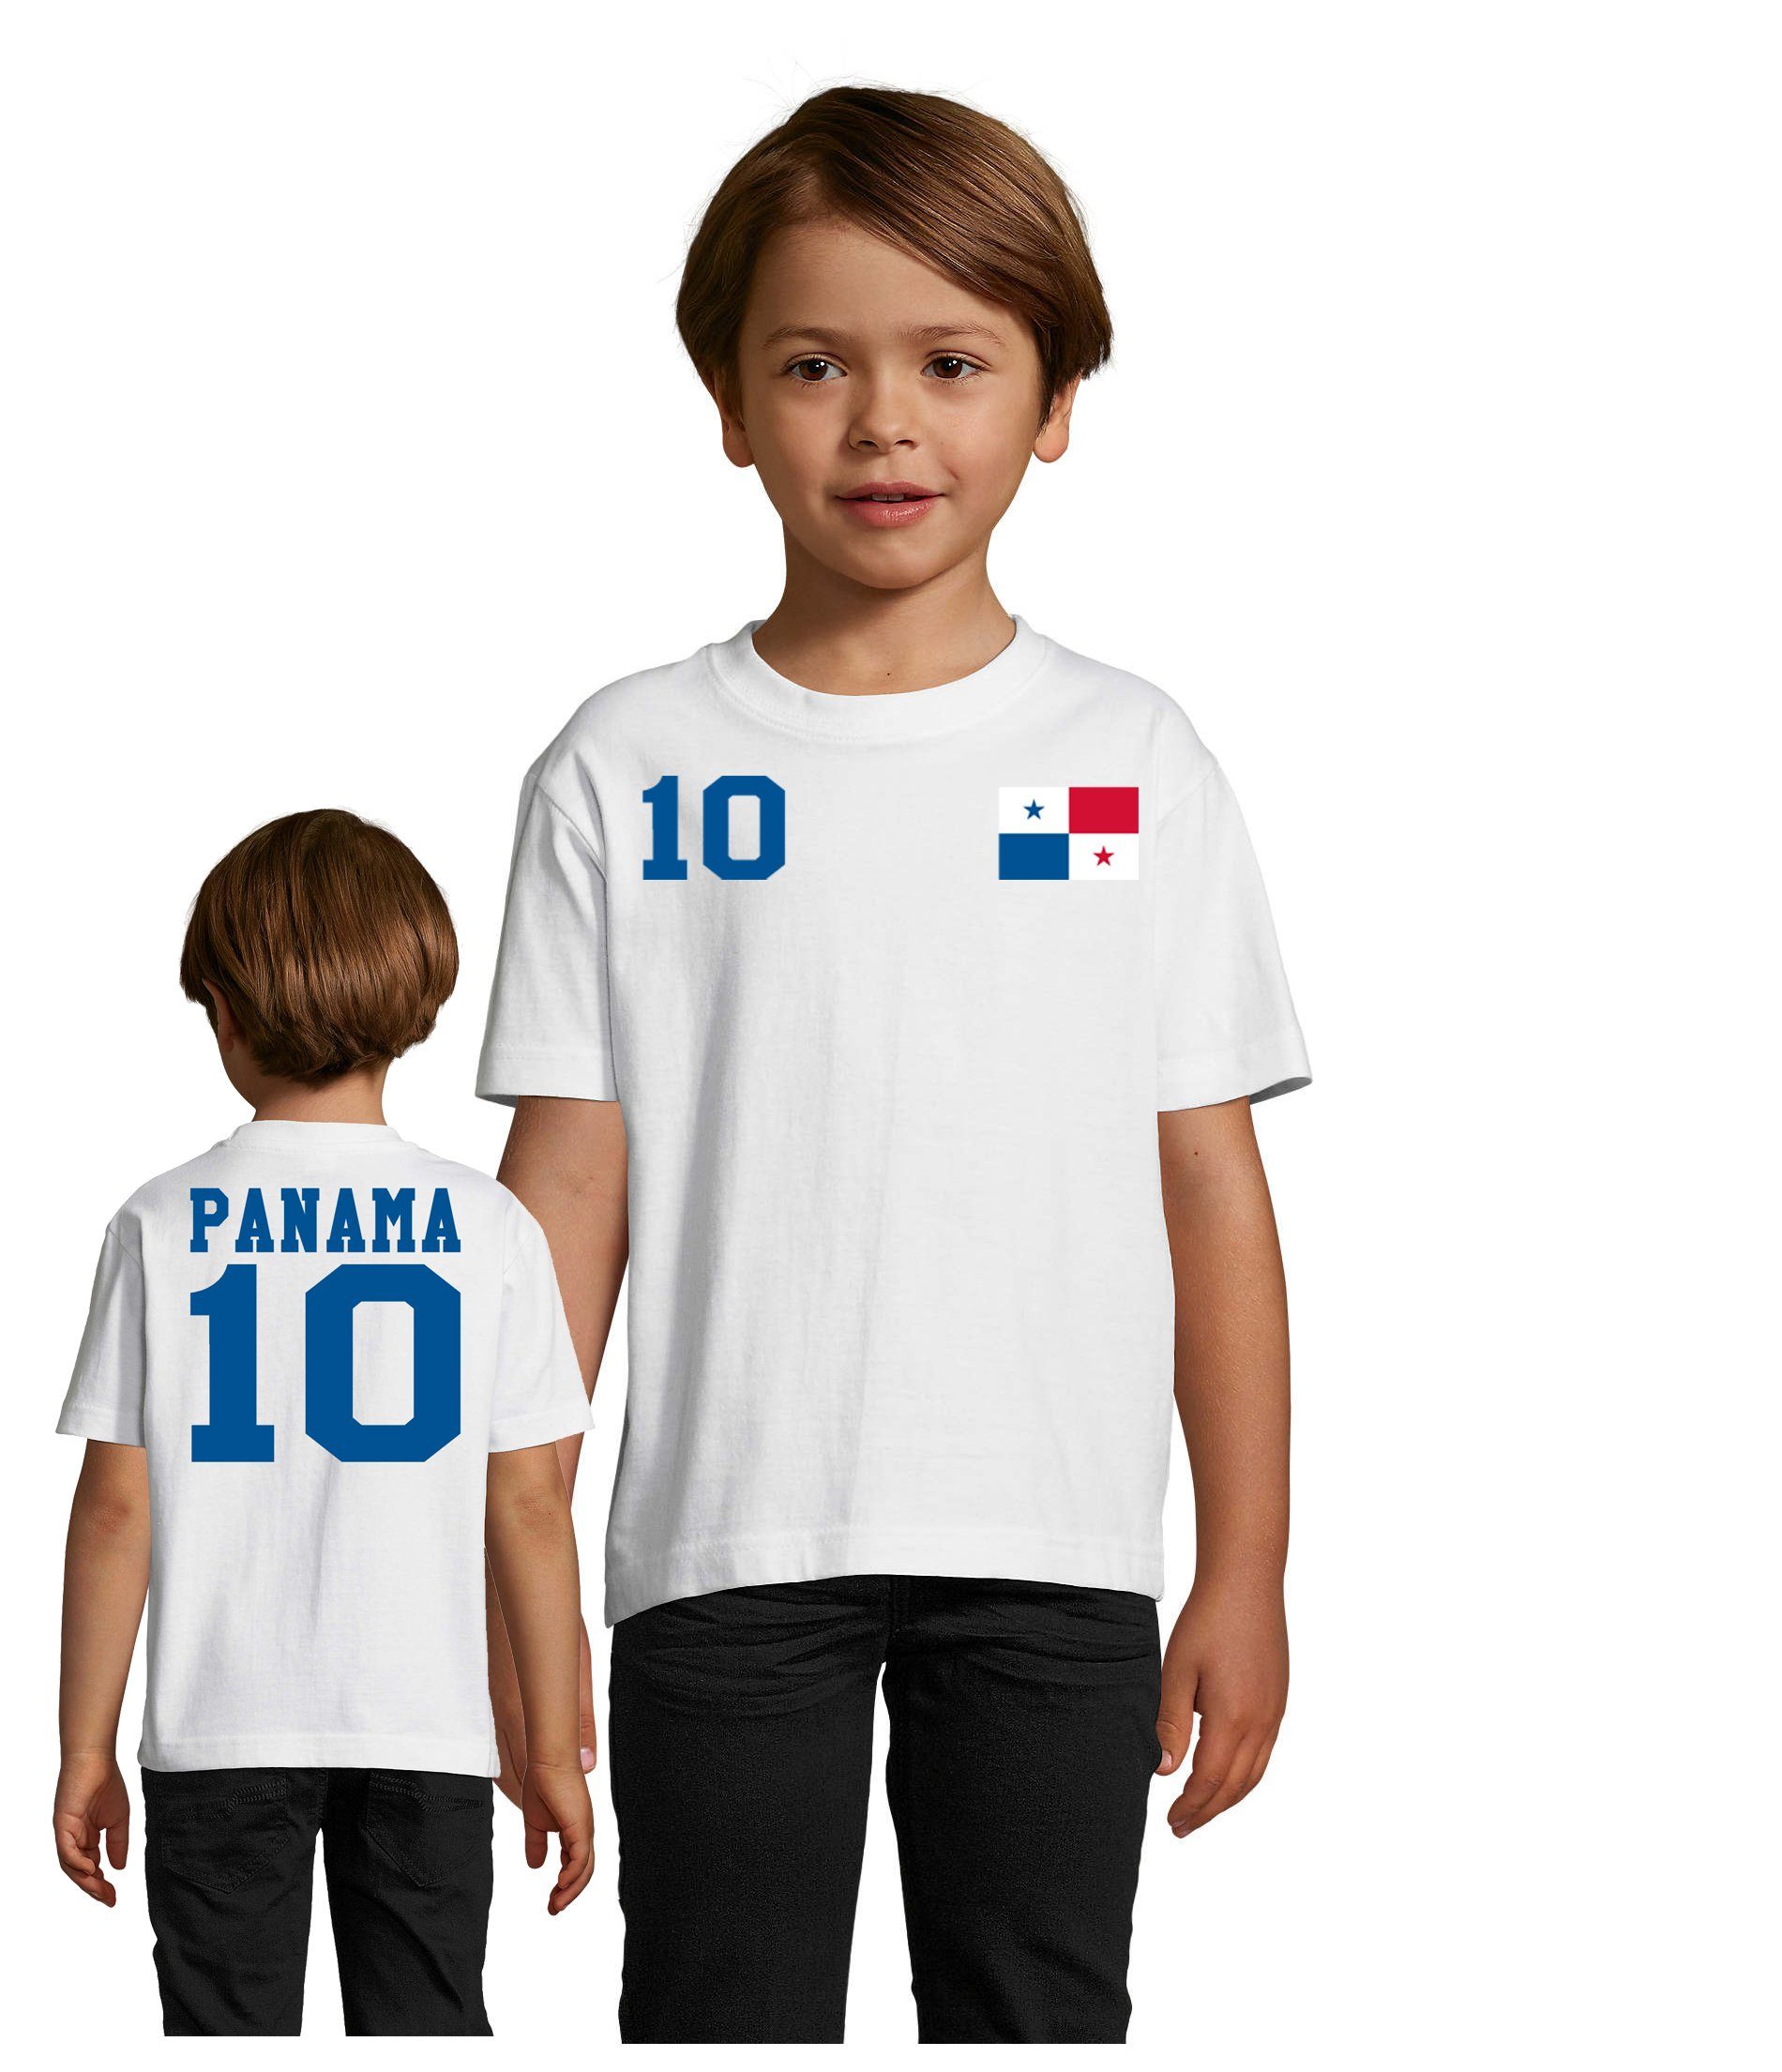 Trikot Copa Blondie Fun WM T-Shirt Fan Panama Sport & Kinder Fußball Meister America Brownie